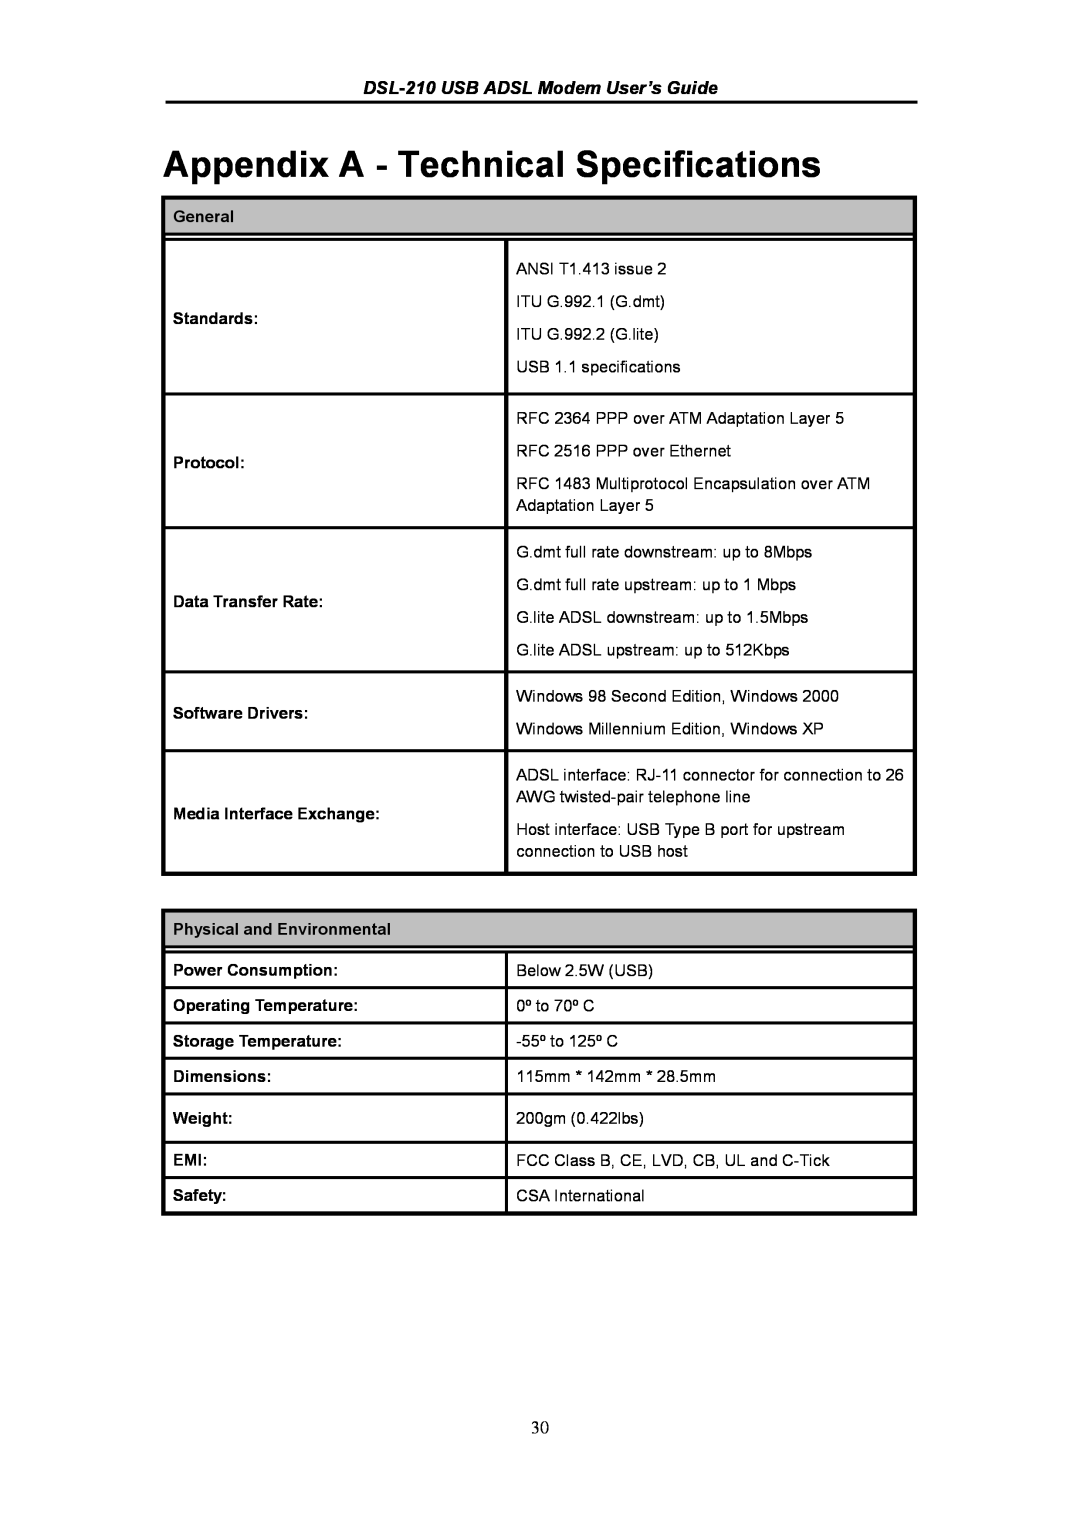 D-Link manual Appendix A - Technical Specifications, DSL-210 USB ADSL Modem User’s Guide 